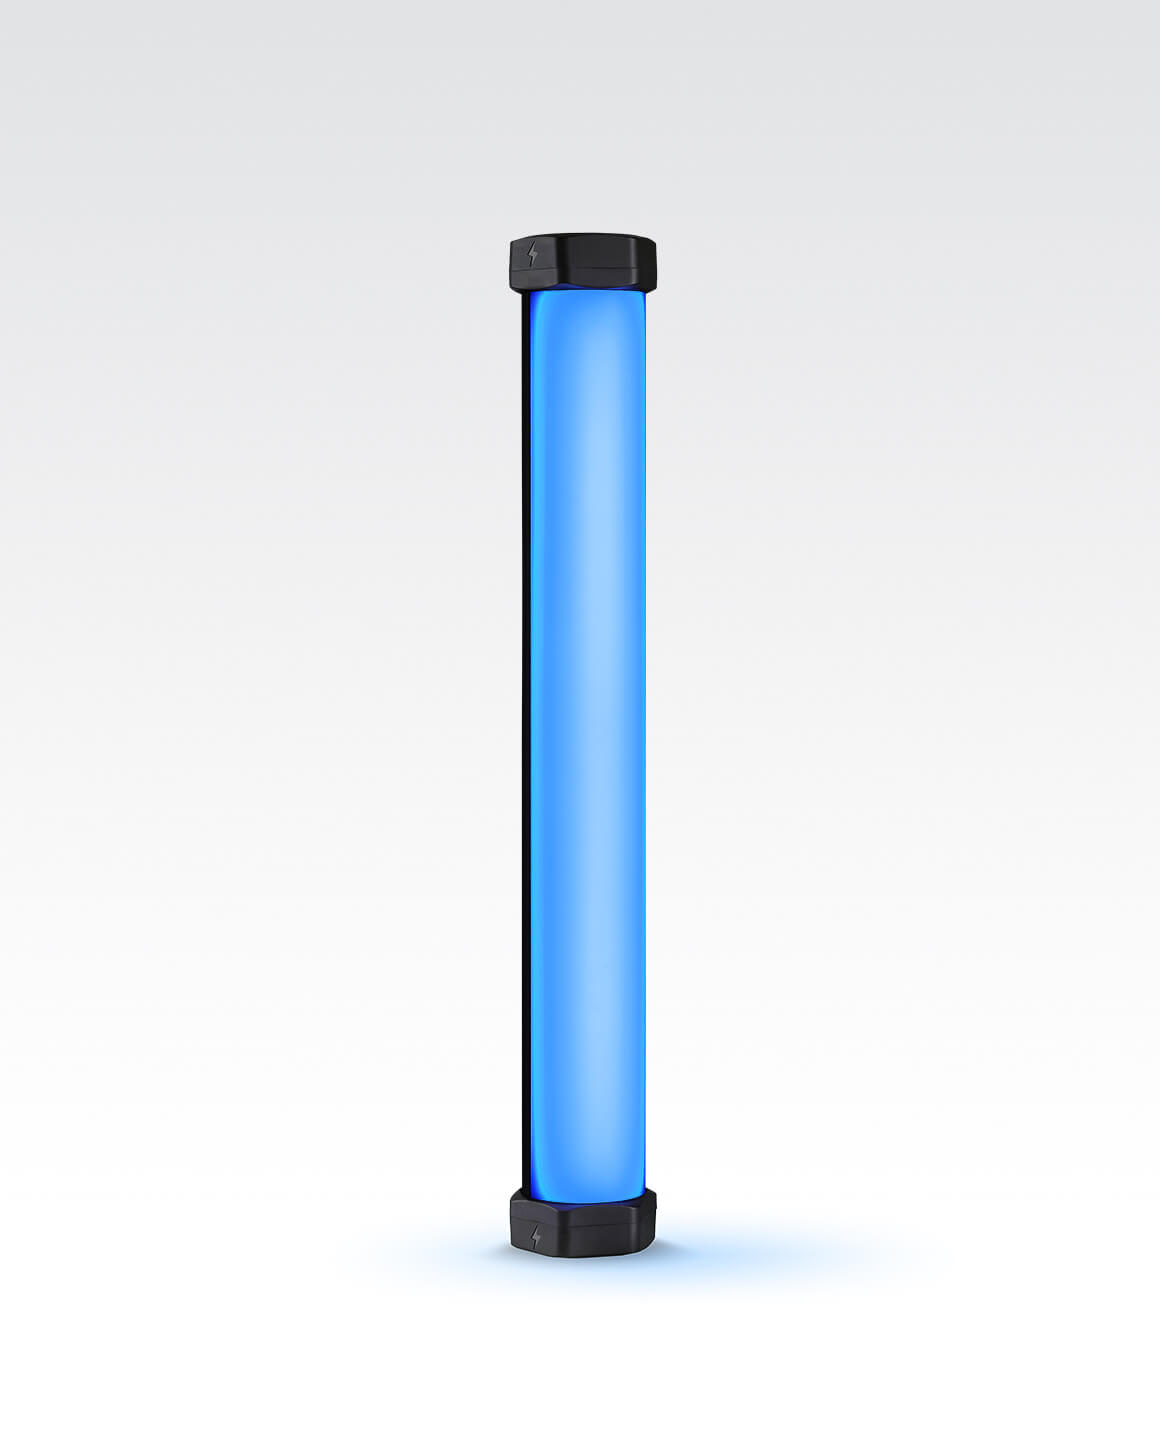 Tube Light Mini - 1ft App-controlled RGB LED Tube Light with Internal  Battery